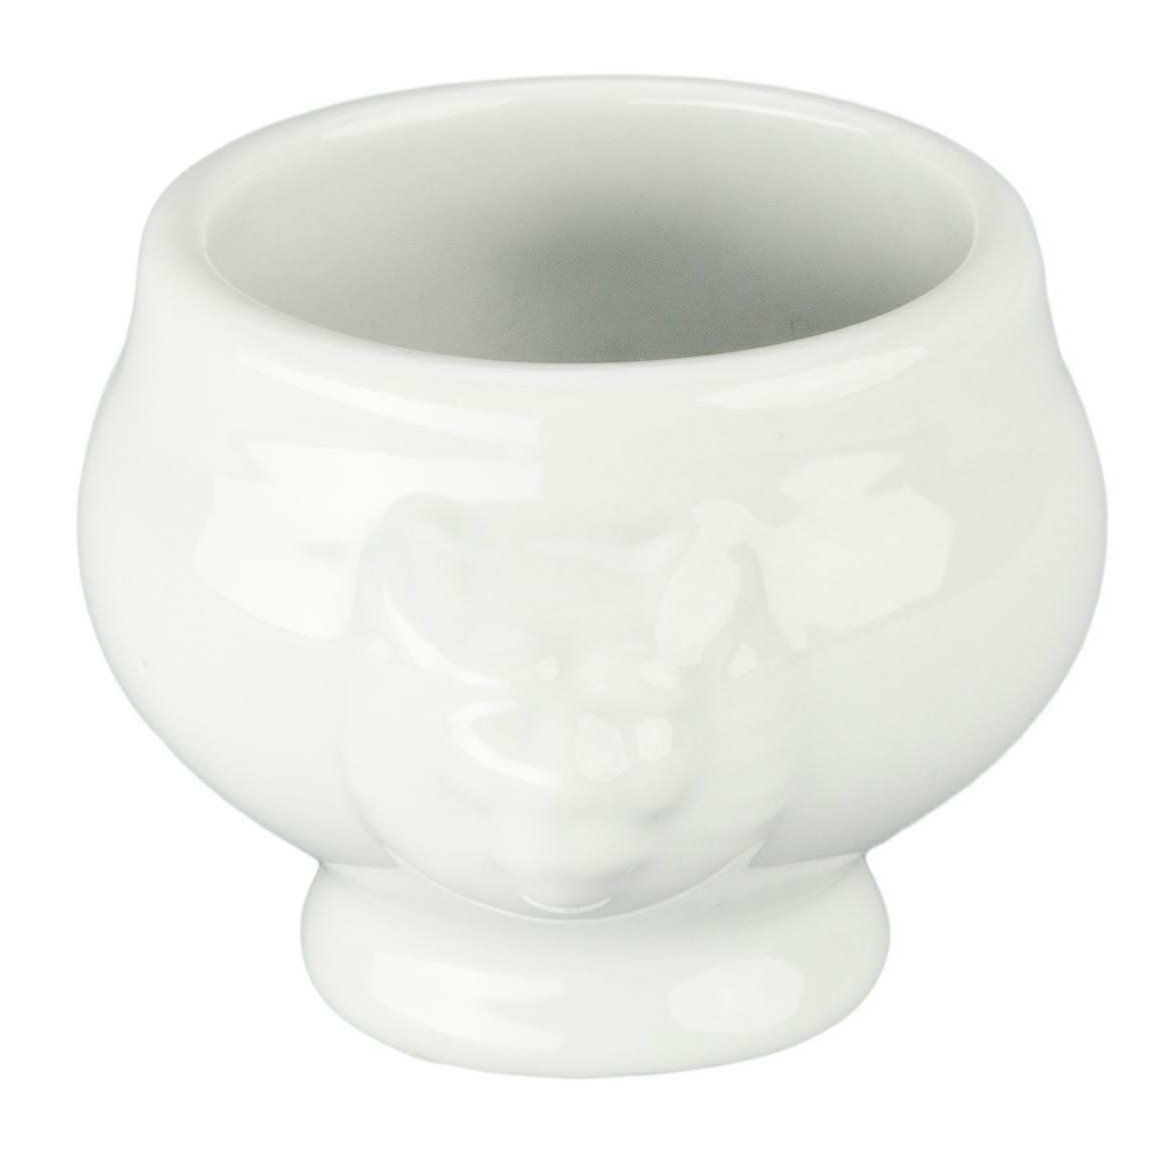 Bia Cordon Bleu Porcelain Lion's Head Bowl, 3.75 oz, Porcelain